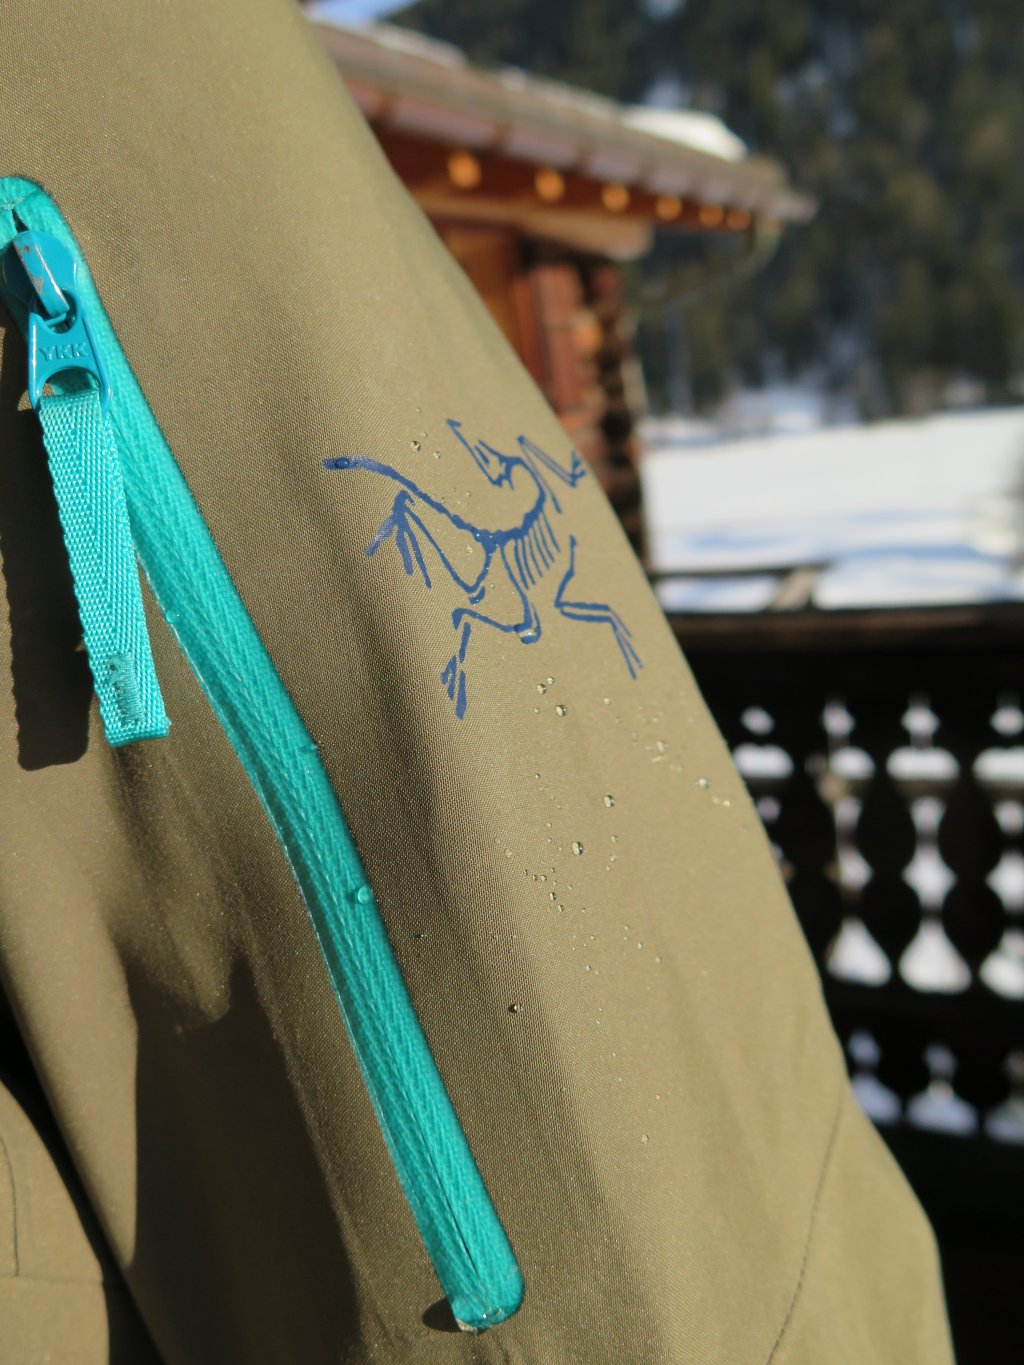 The practical ski pass pocket on the left upper arm